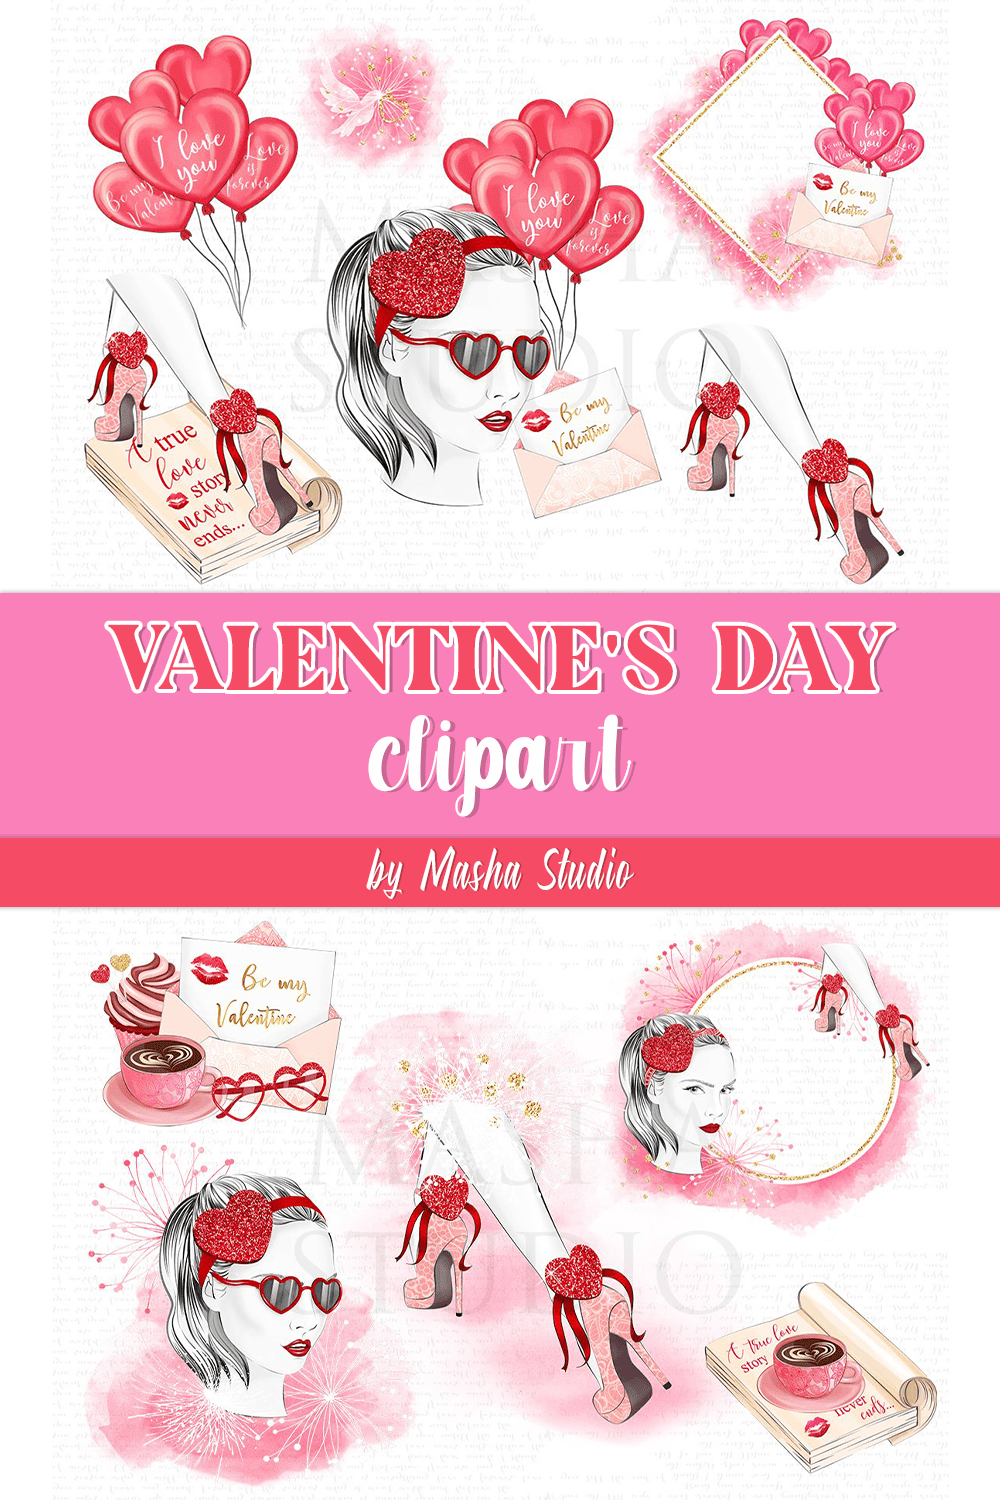 Valentine's Day Clipart - Pinterest.